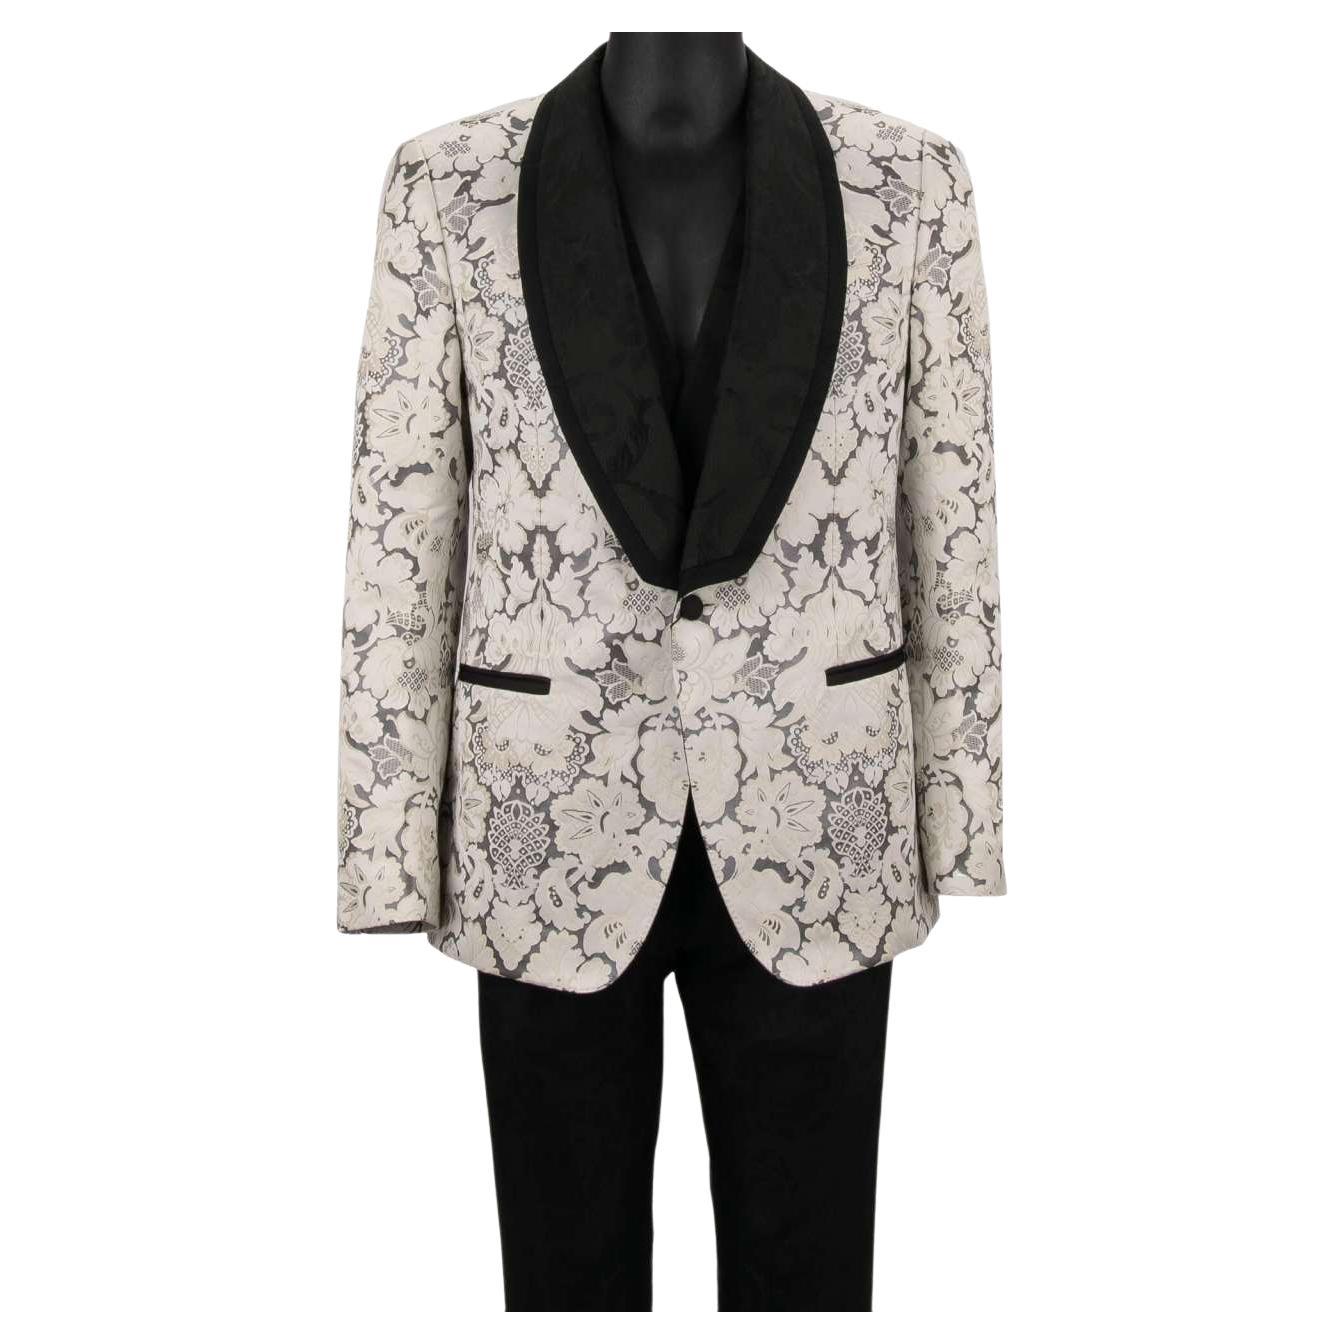 D&G Baroque 3 Piece Jacquard Suit Jacket Waistcoat MARTINI White Black 54 For Sale